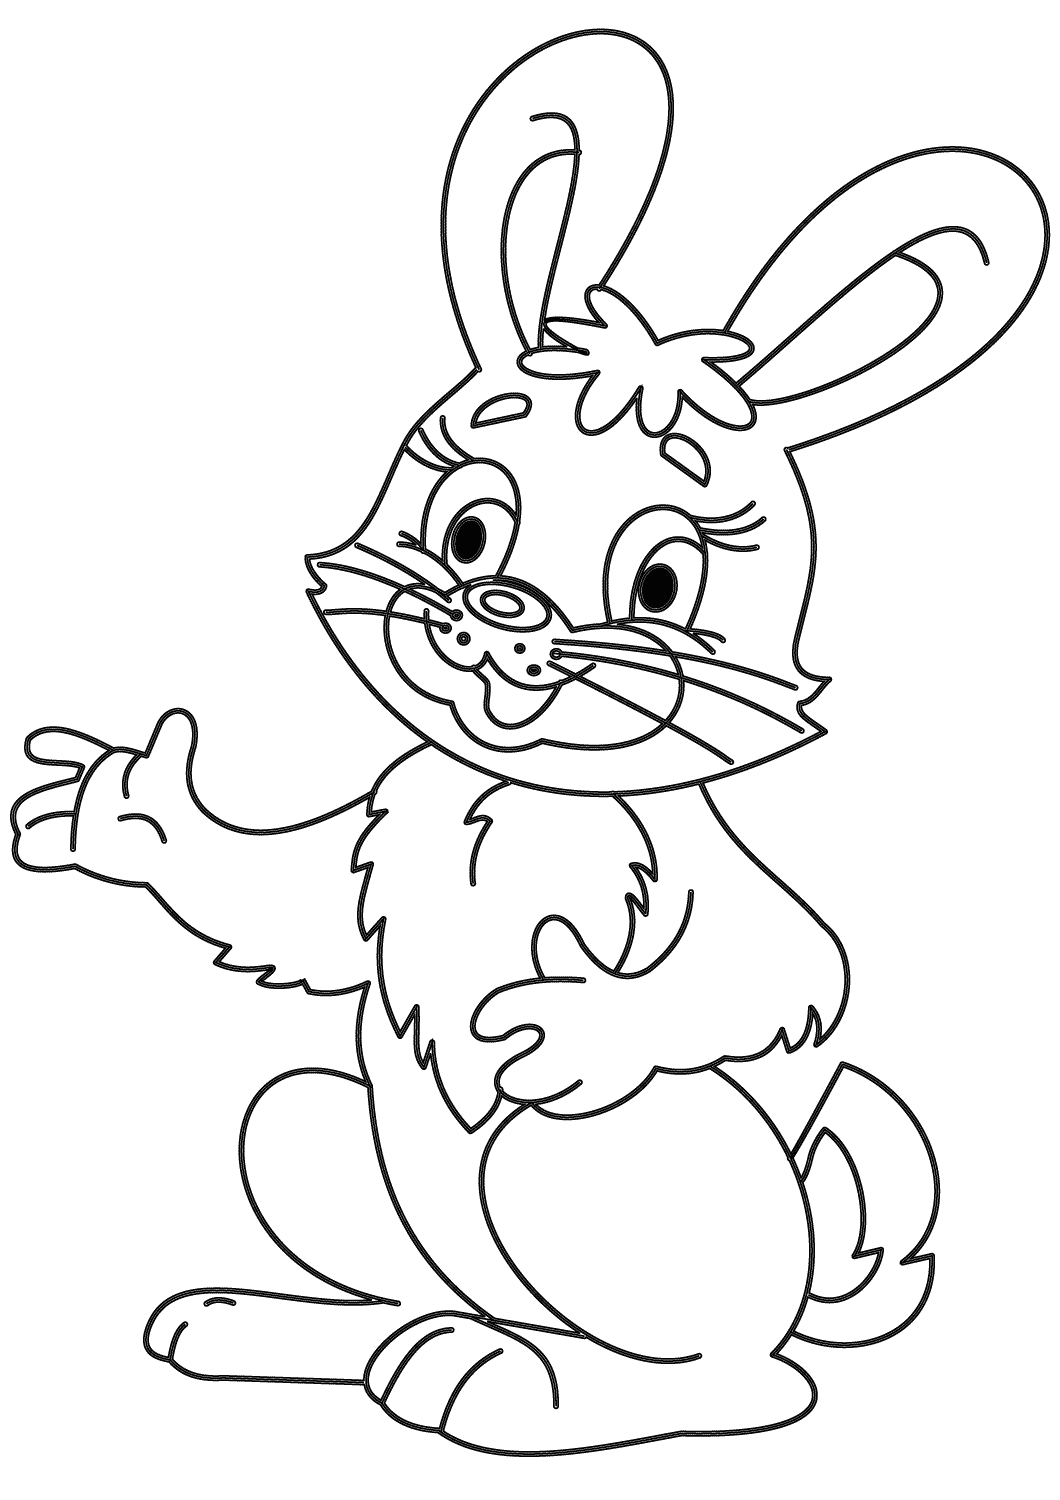 Lapin de dessin animé mignon parlant quelque chose de Bunny